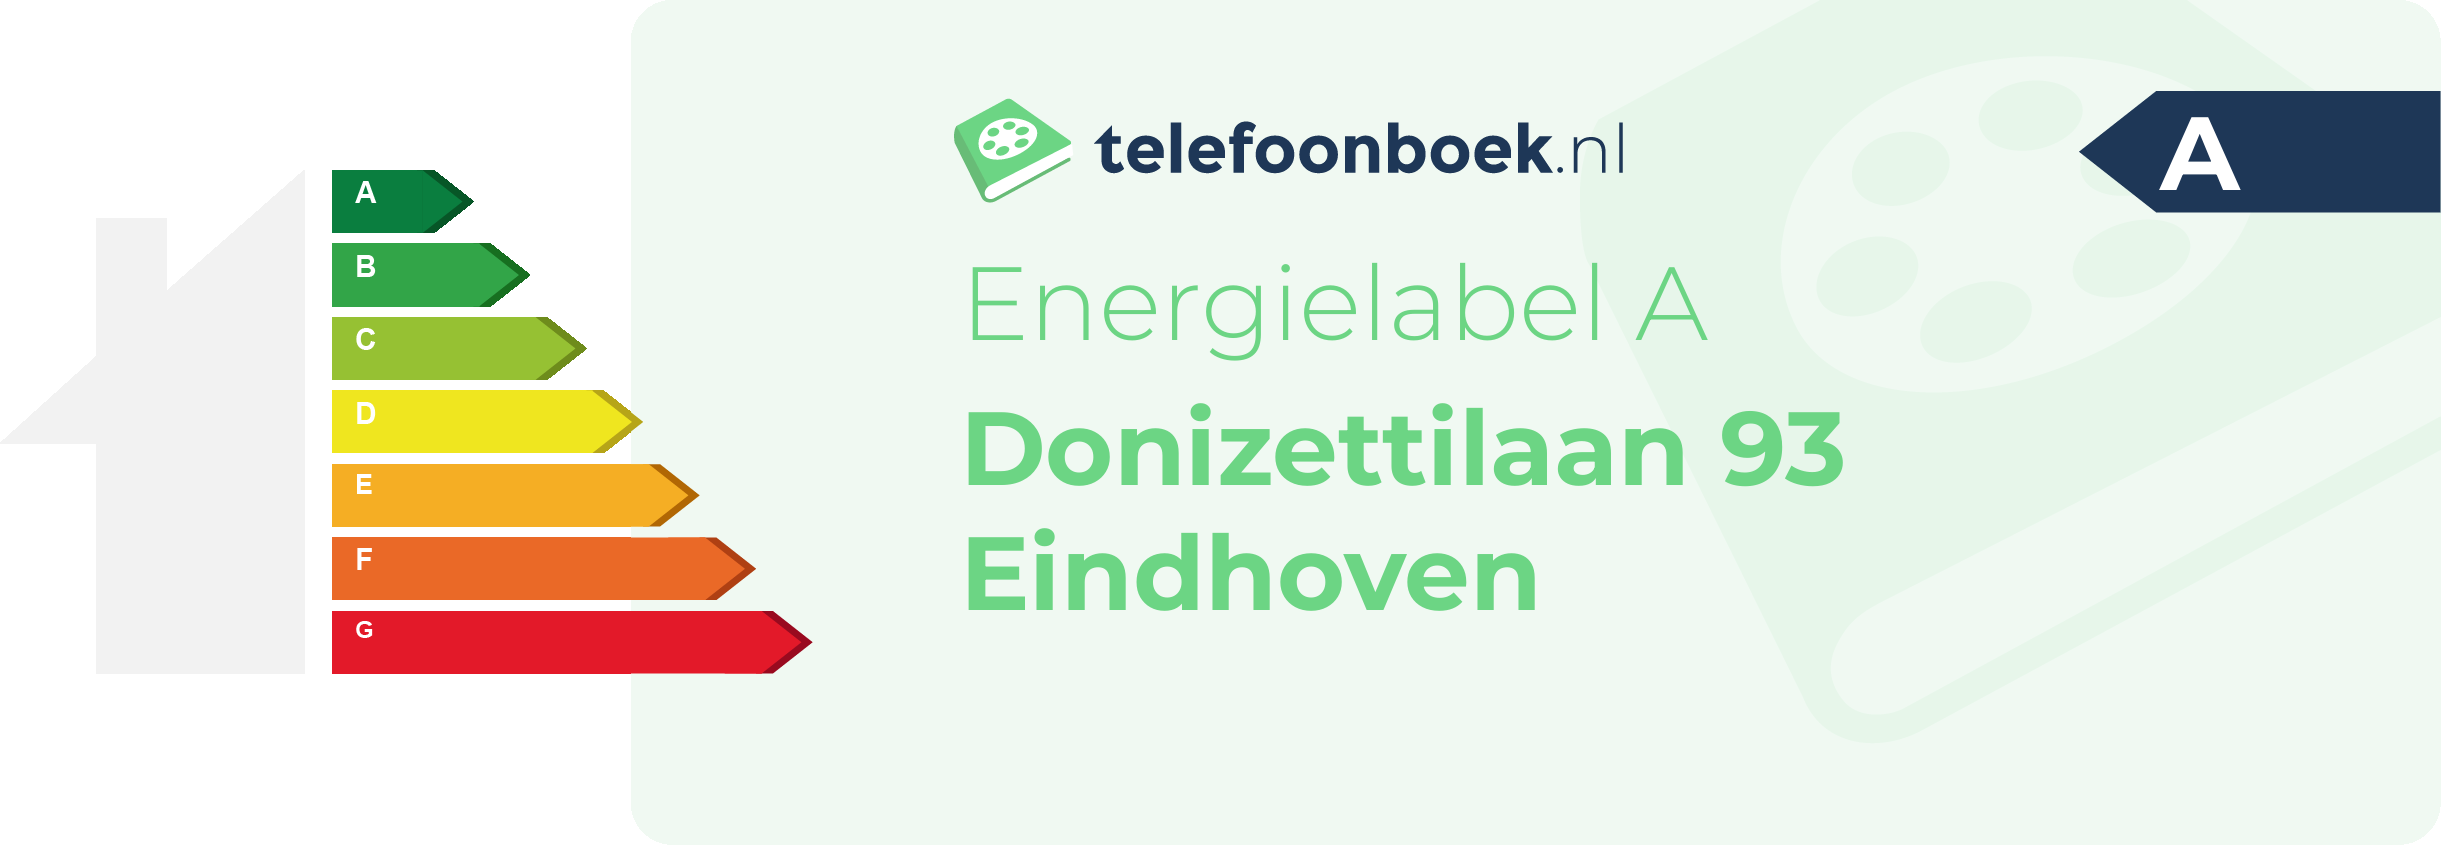 Energielabel Donizettilaan 93 Eindhoven